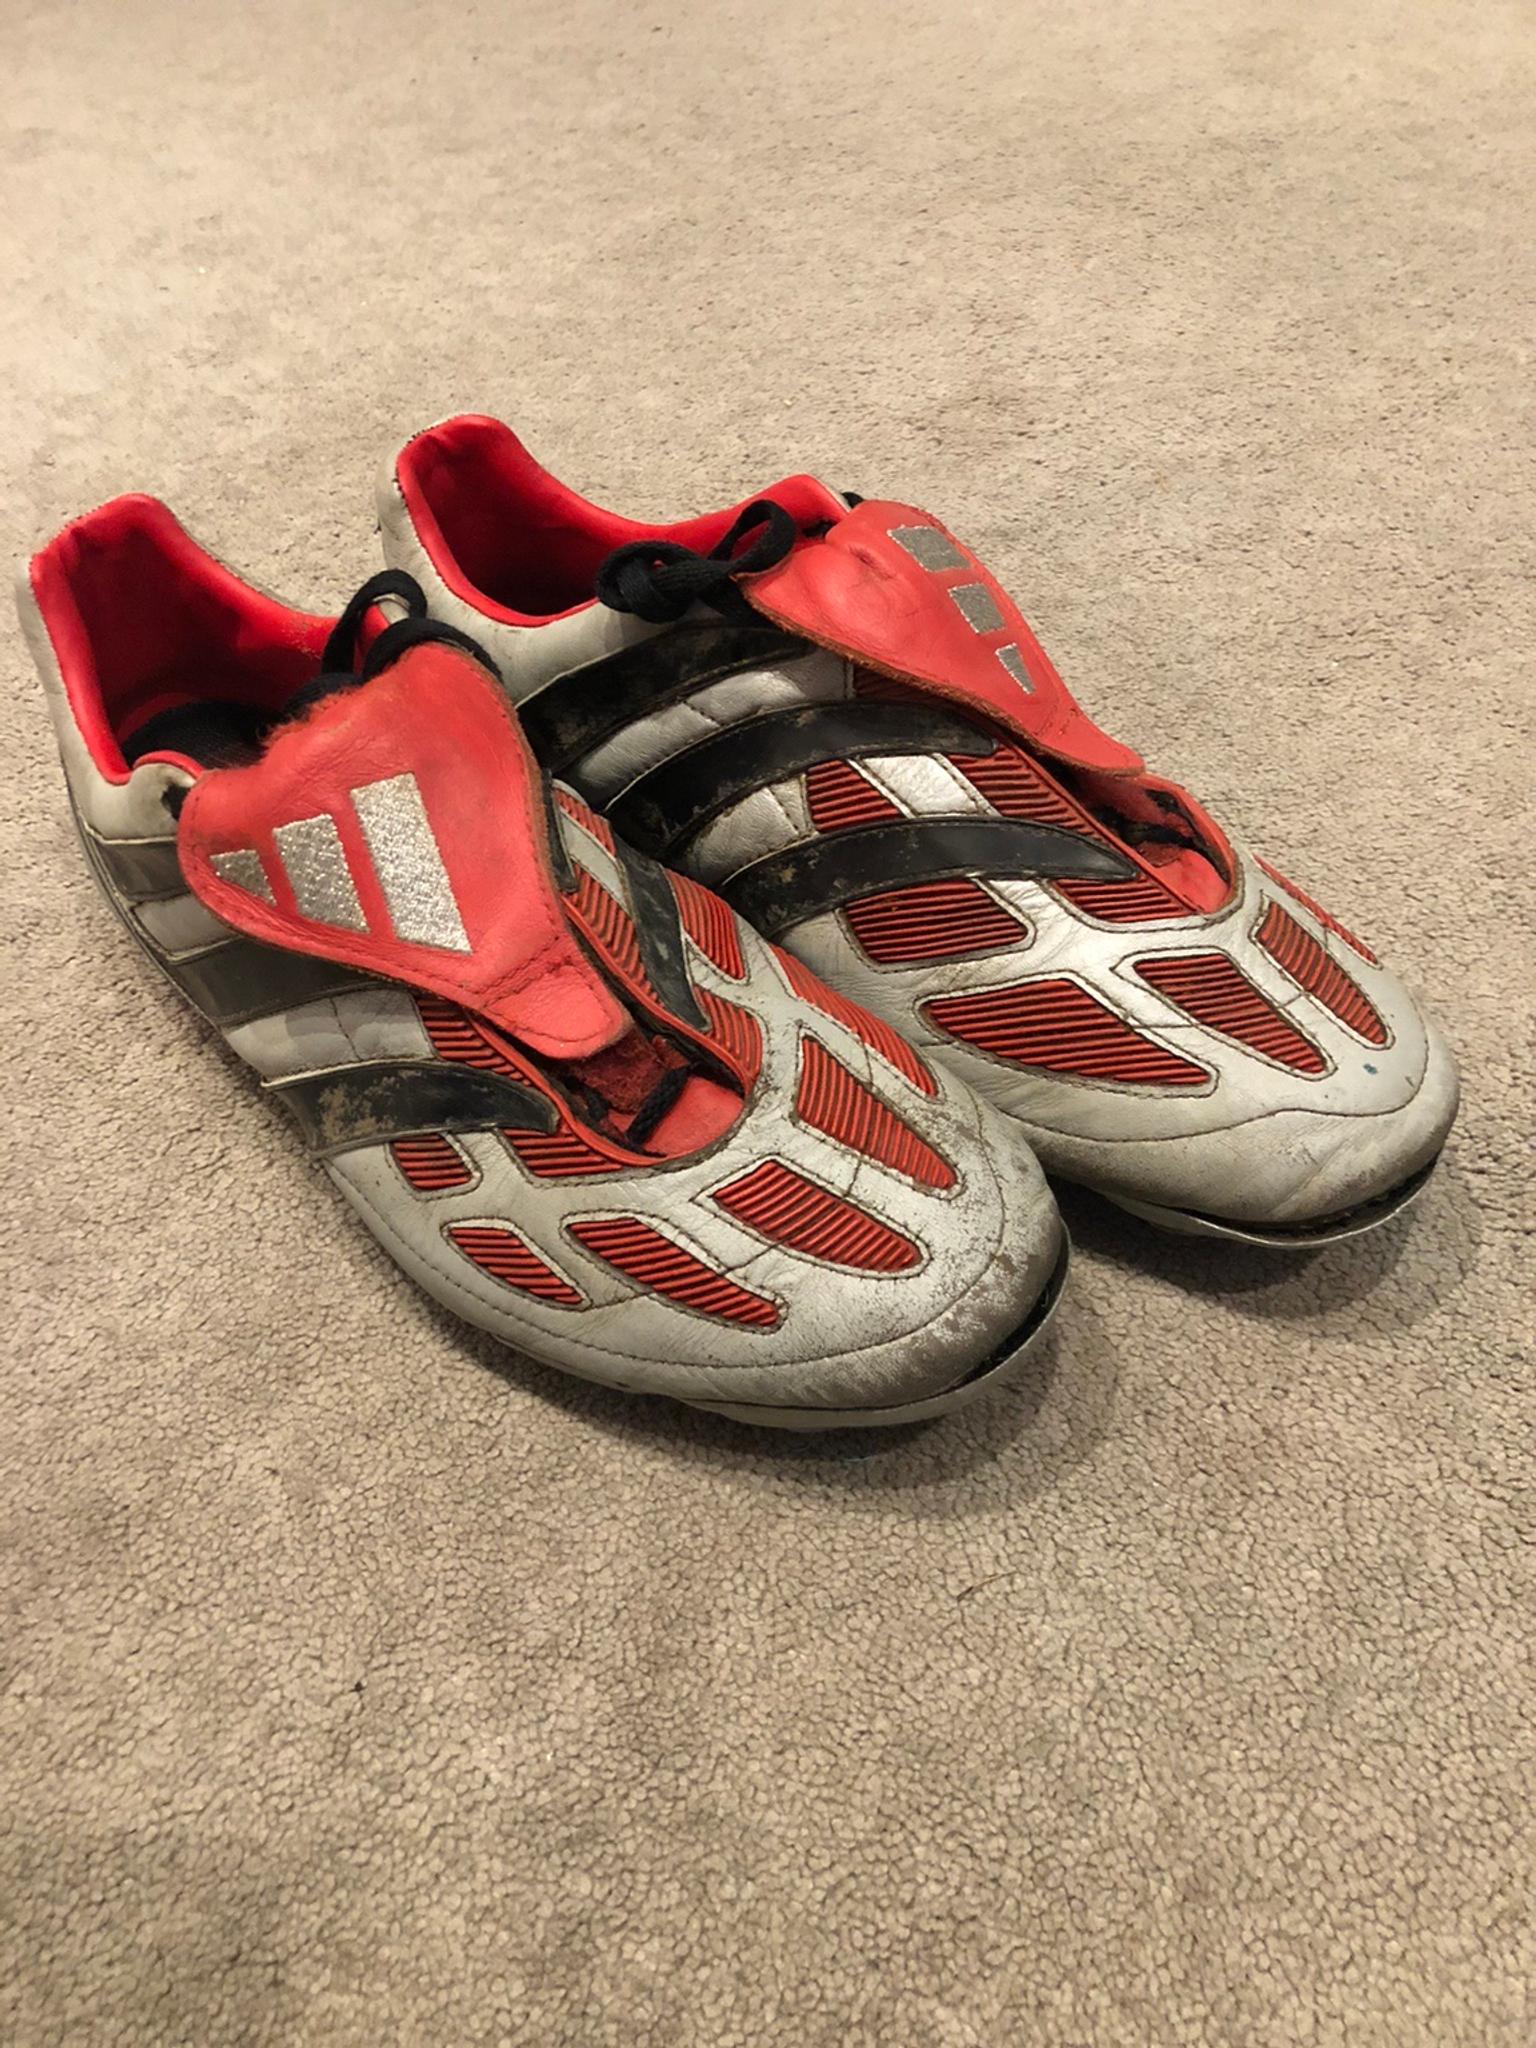 rare adidas football boots